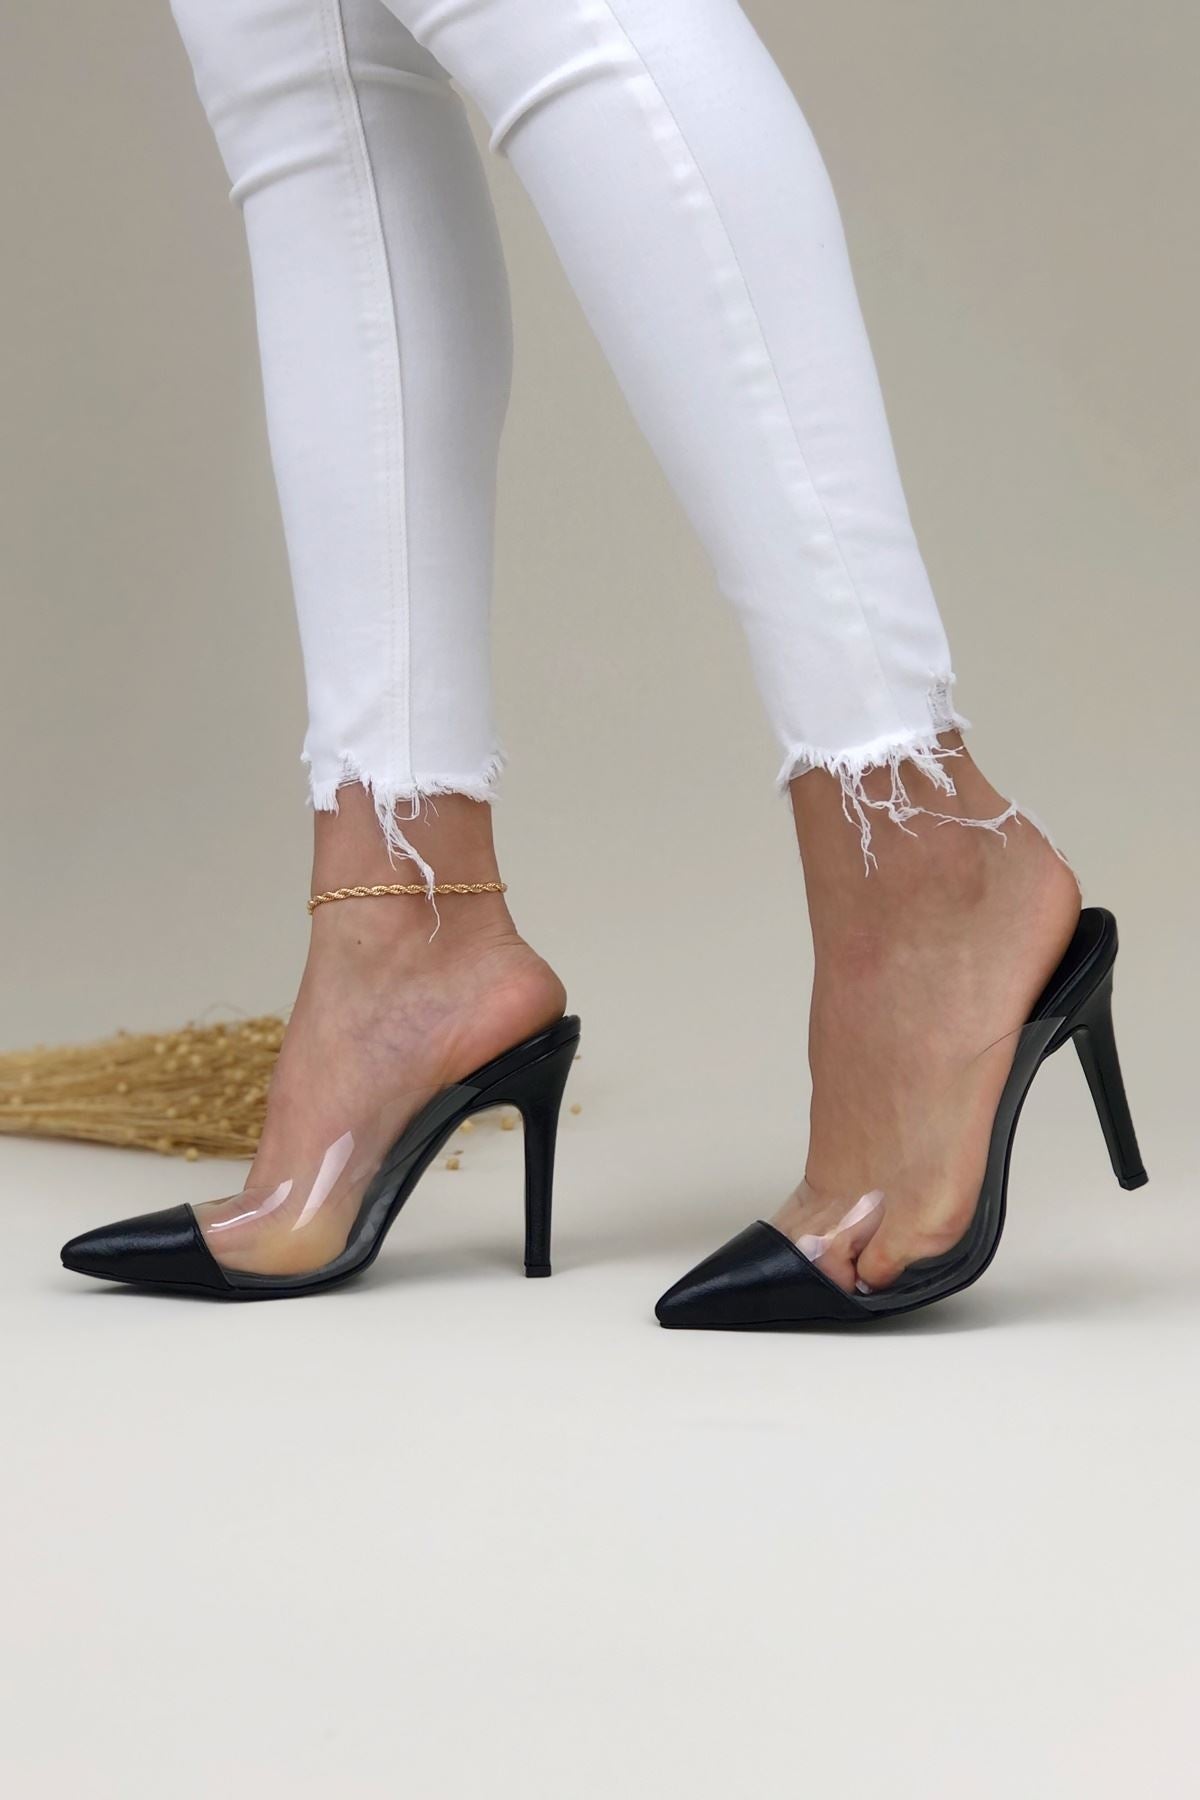 Image of Women's Shiny Black Heeled Slippers